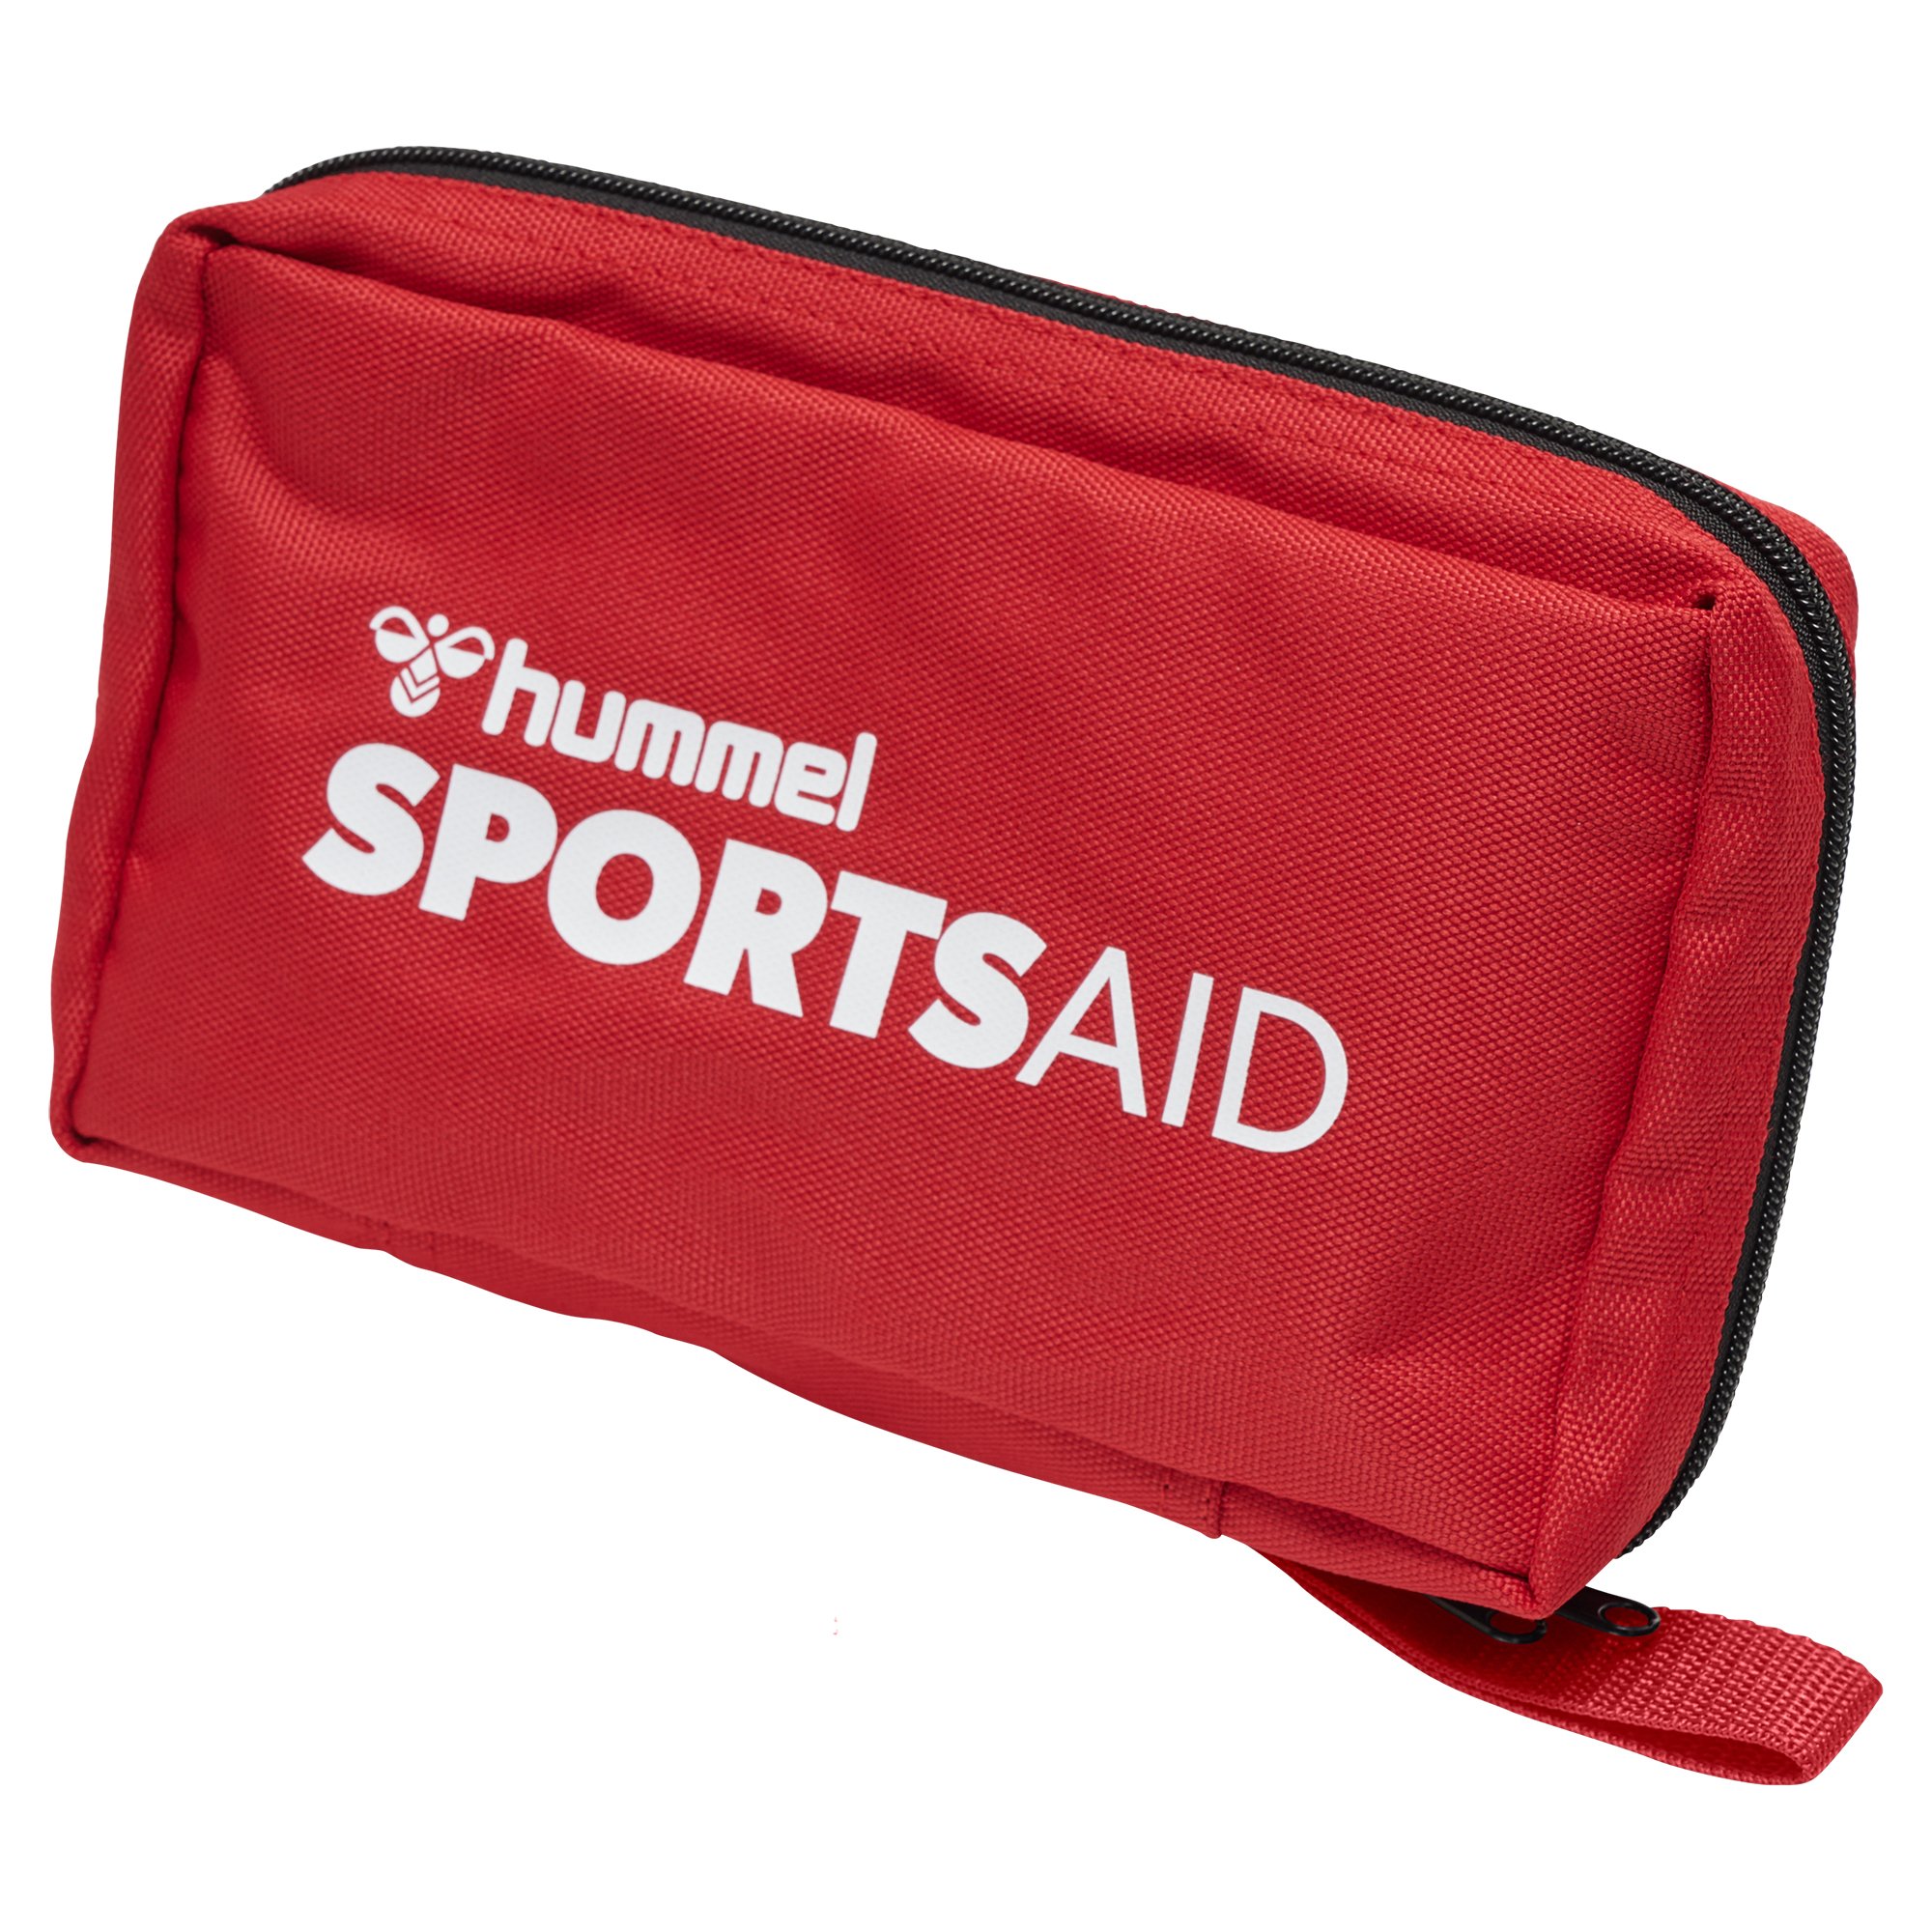 Sportsaid First Aid Bag S